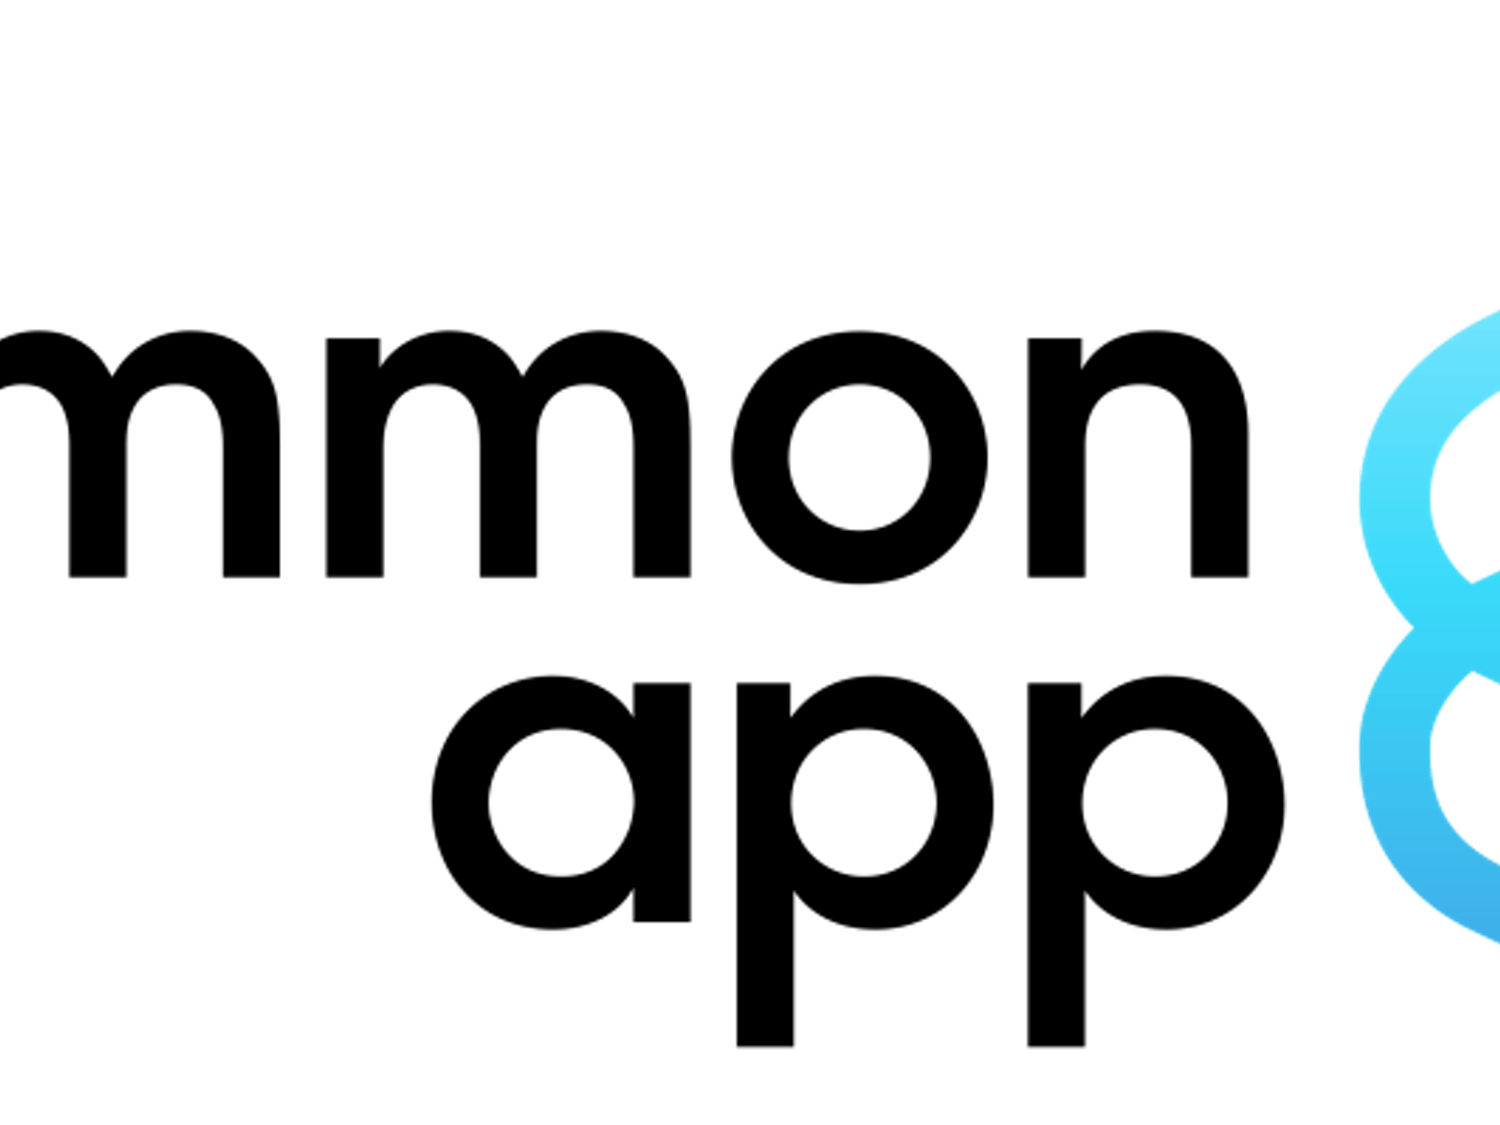 2880px-Common_Application_2019_Logo.svg_